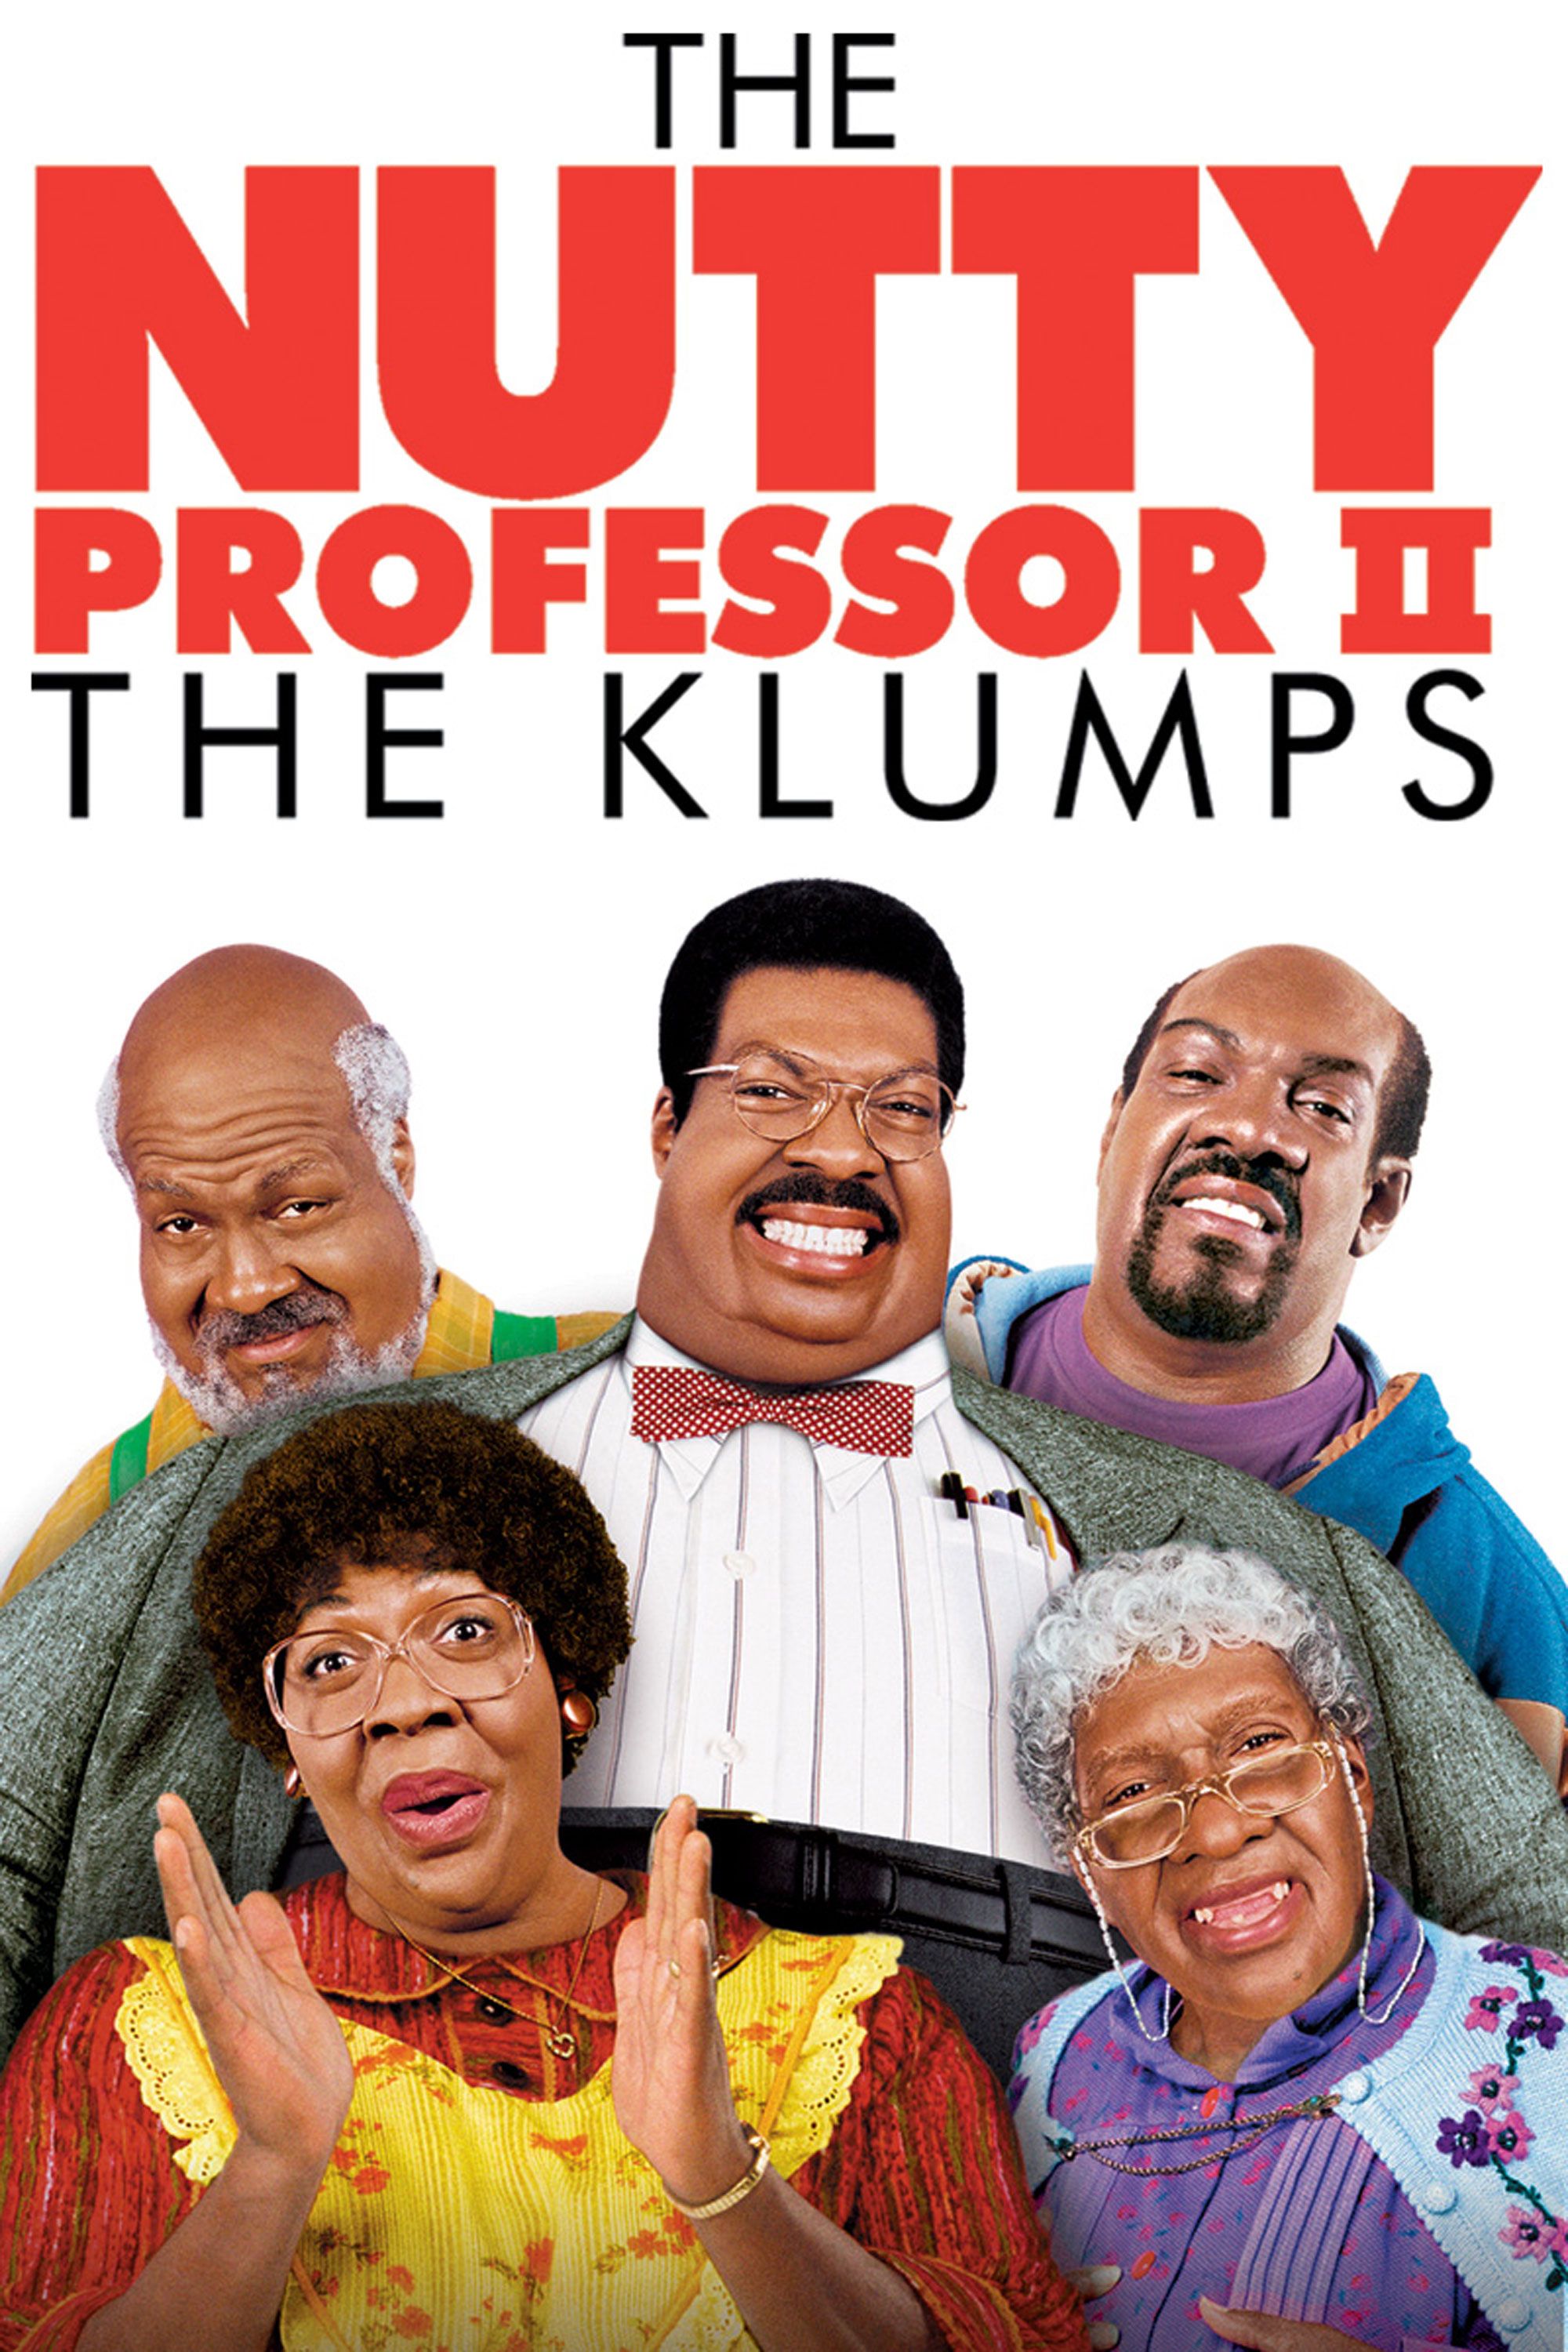 nutty professor ii the klumps